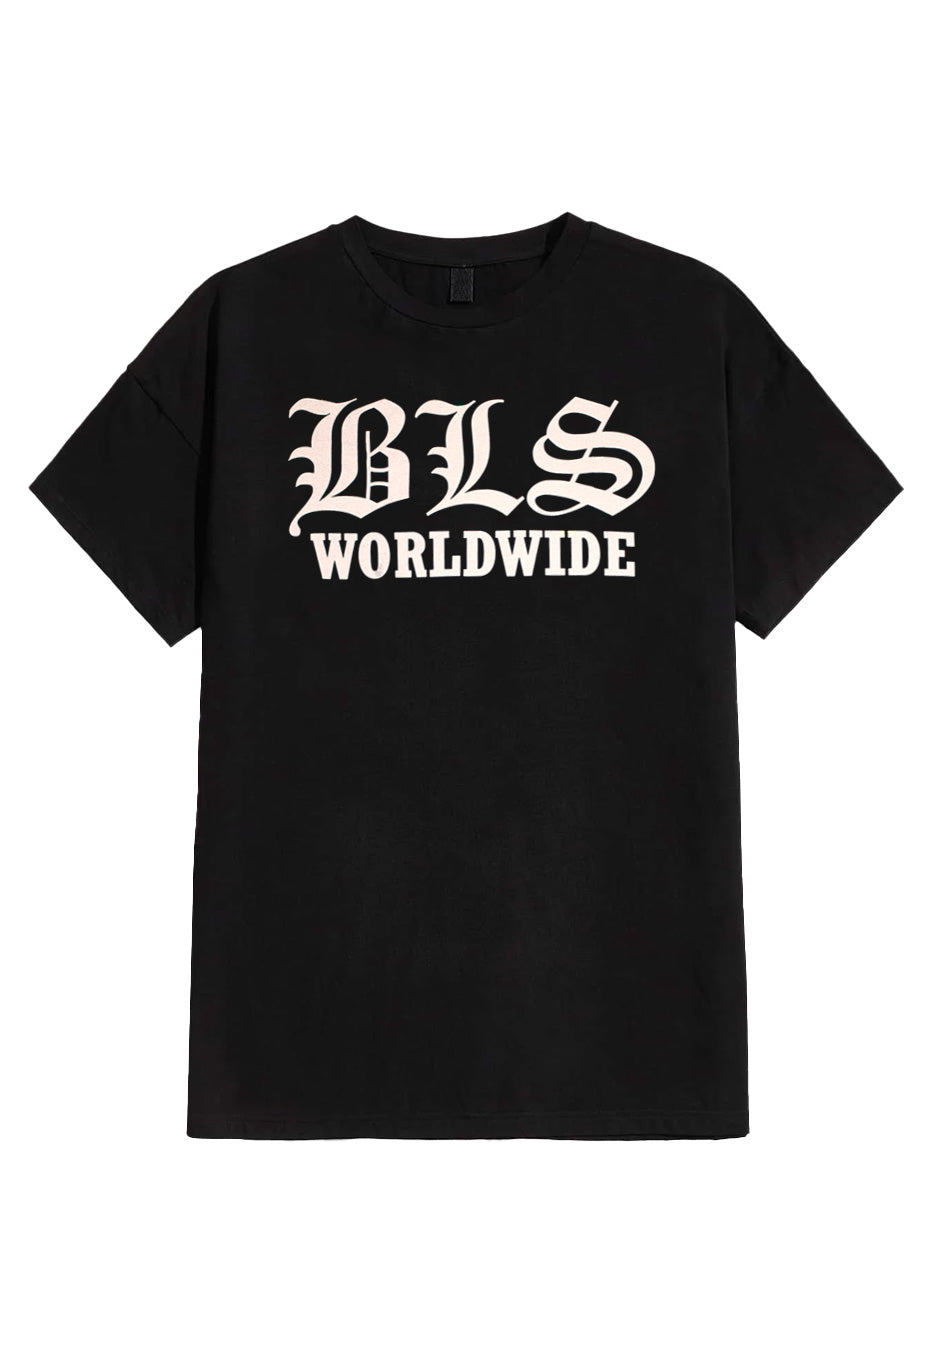 Black Label Society - Worldwide (Back Print) - T-Shirt